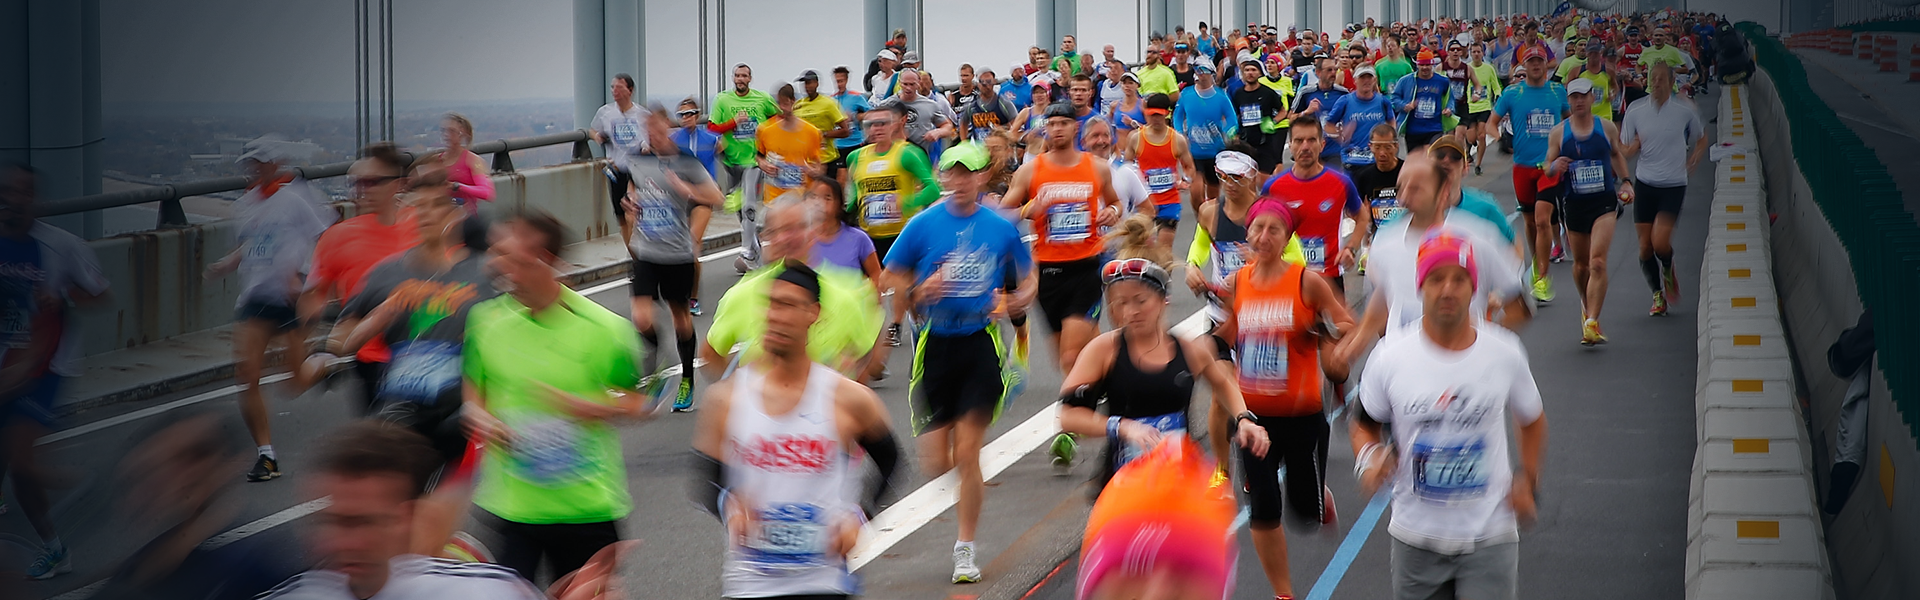 Image - marathon runners on bridge